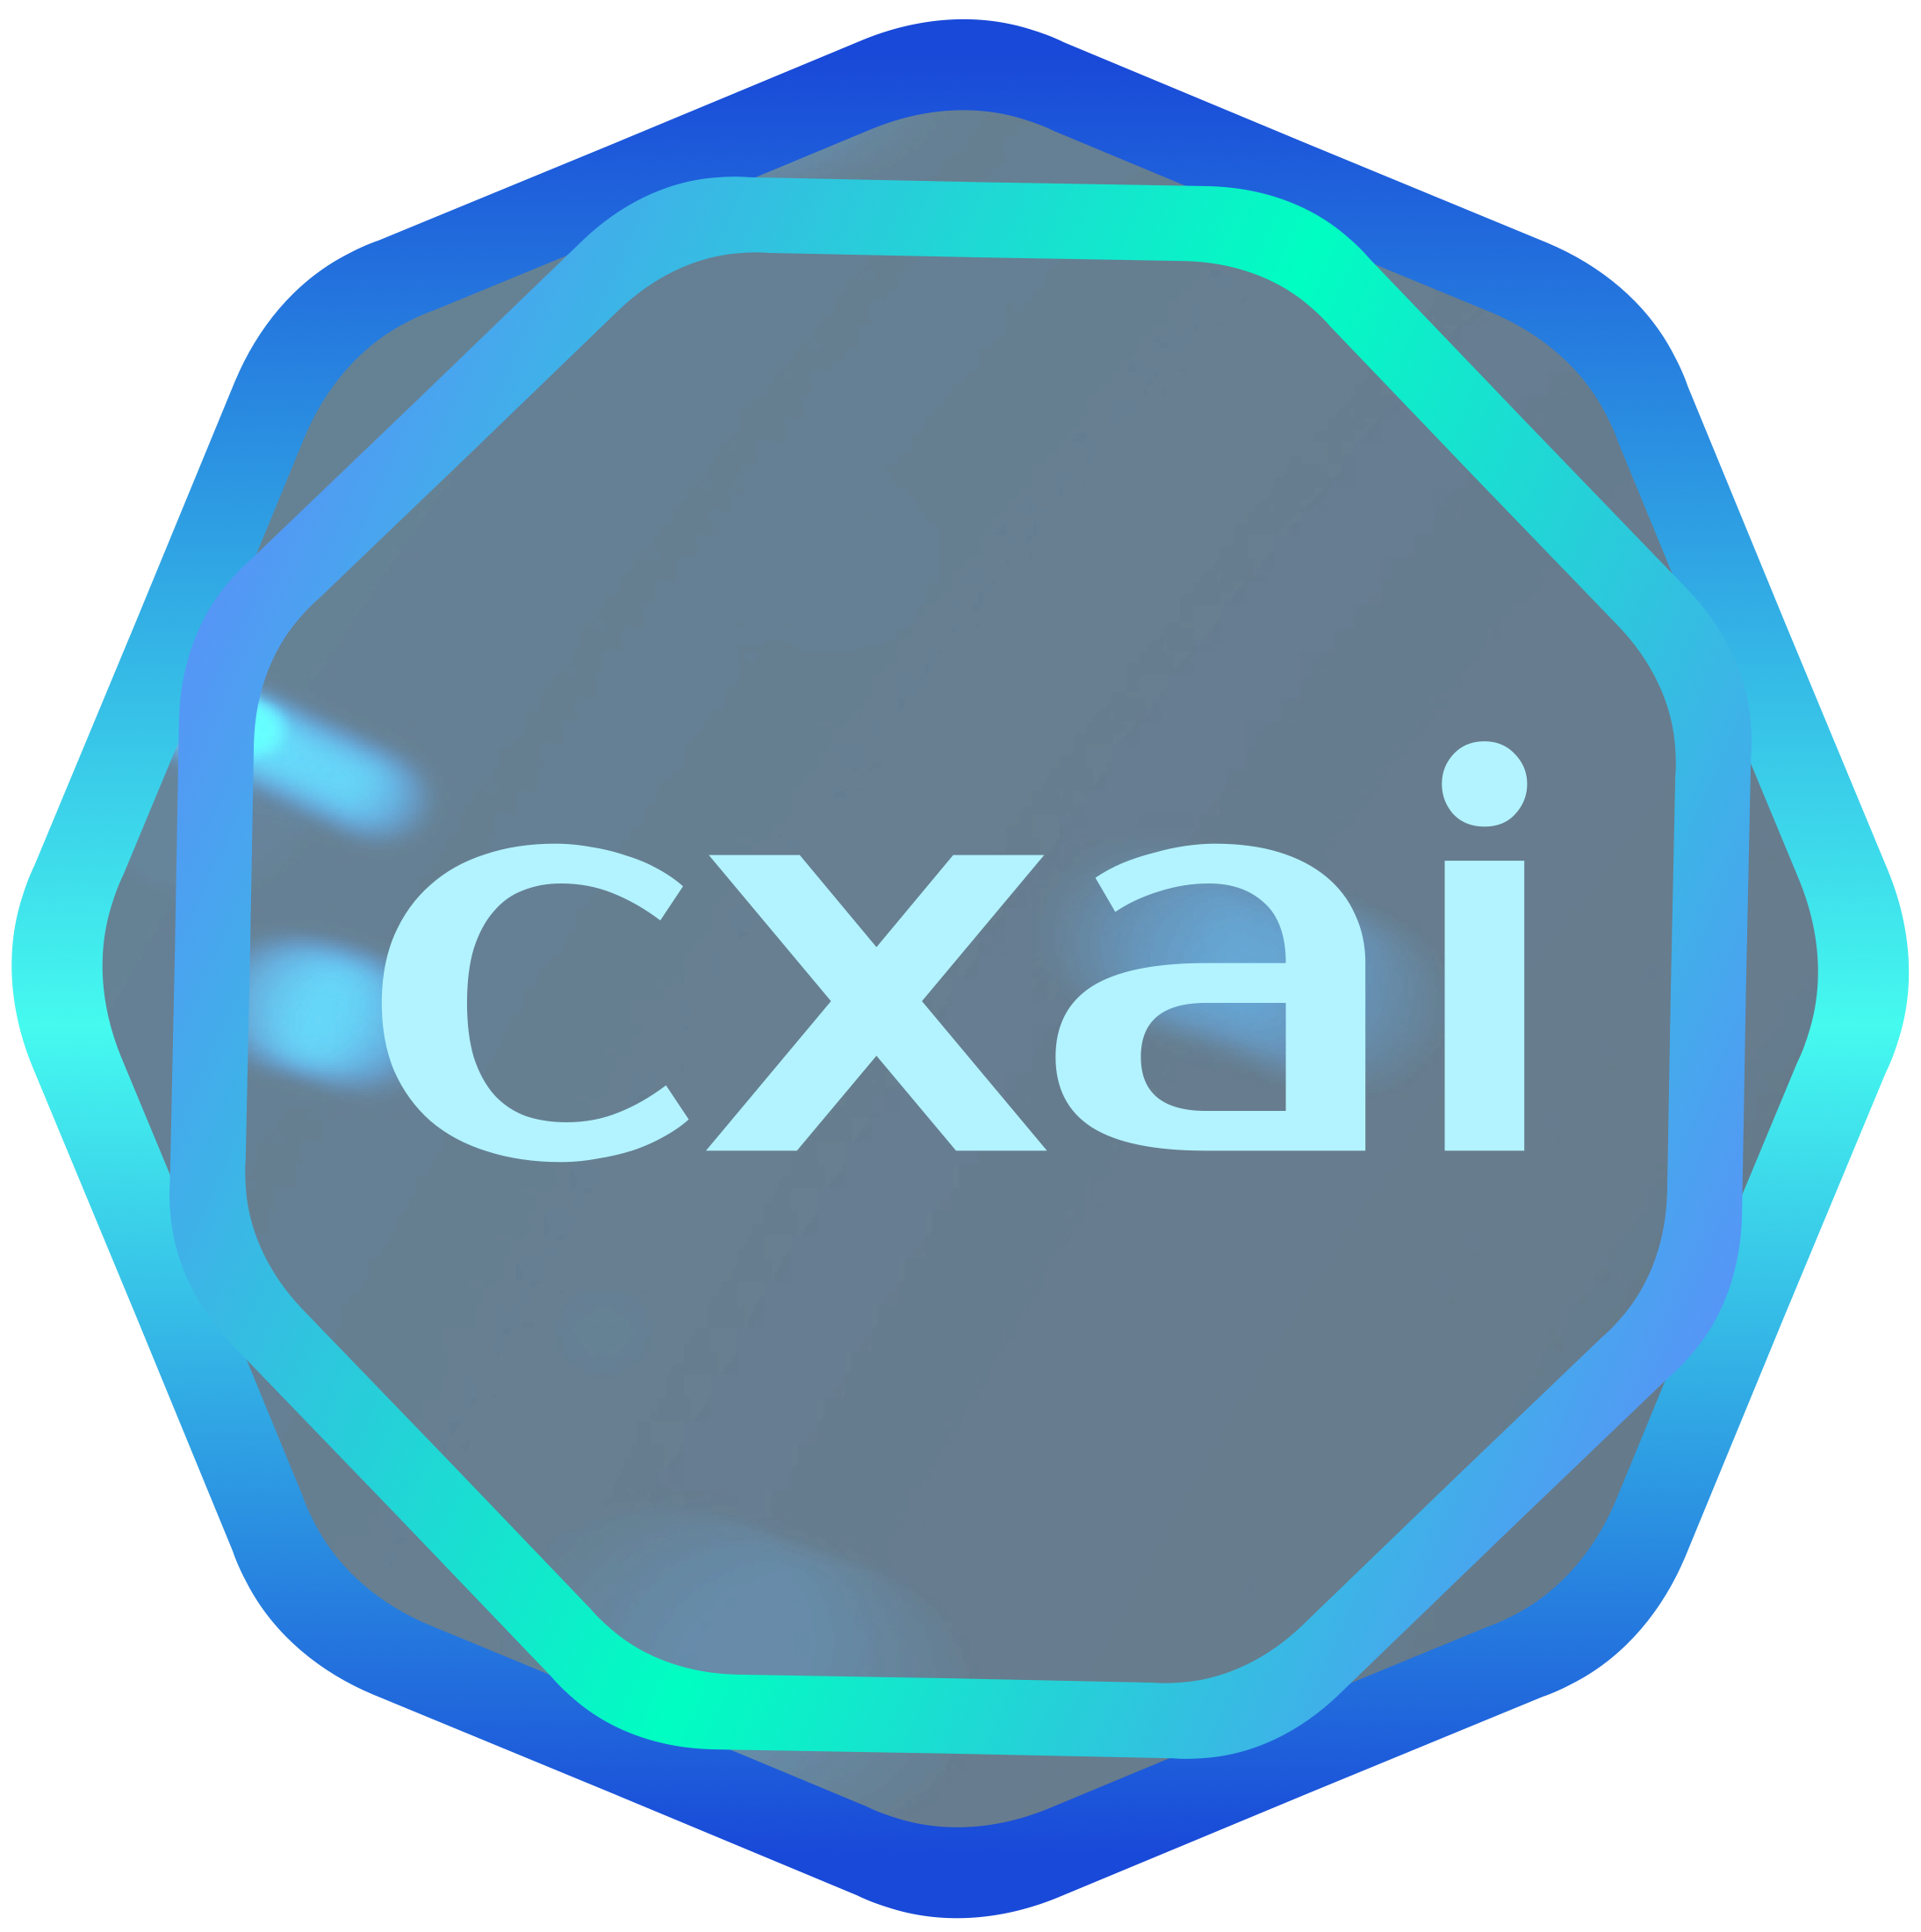 CXApp, Inc logo